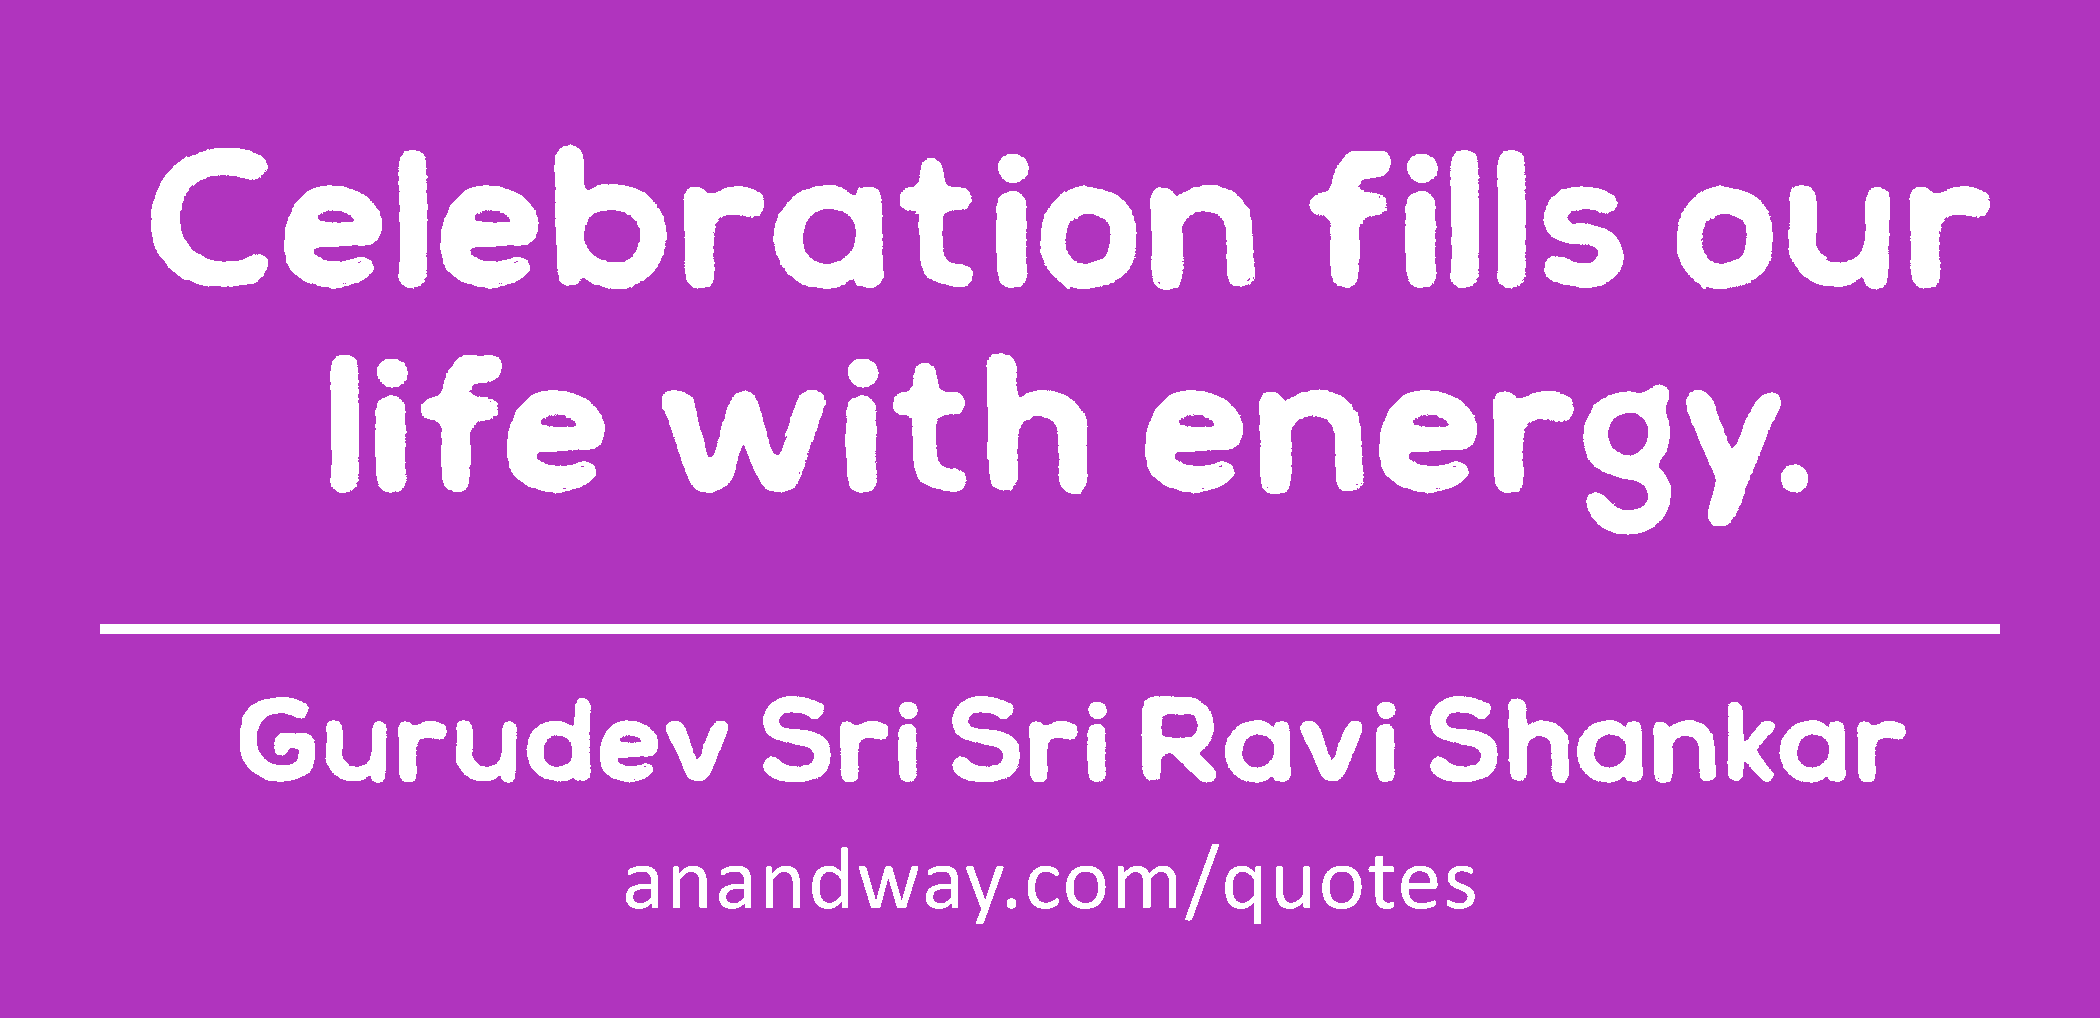 Celebration fills our life with energy. 
 -Gurudev Sri Sri Ravi Shankar